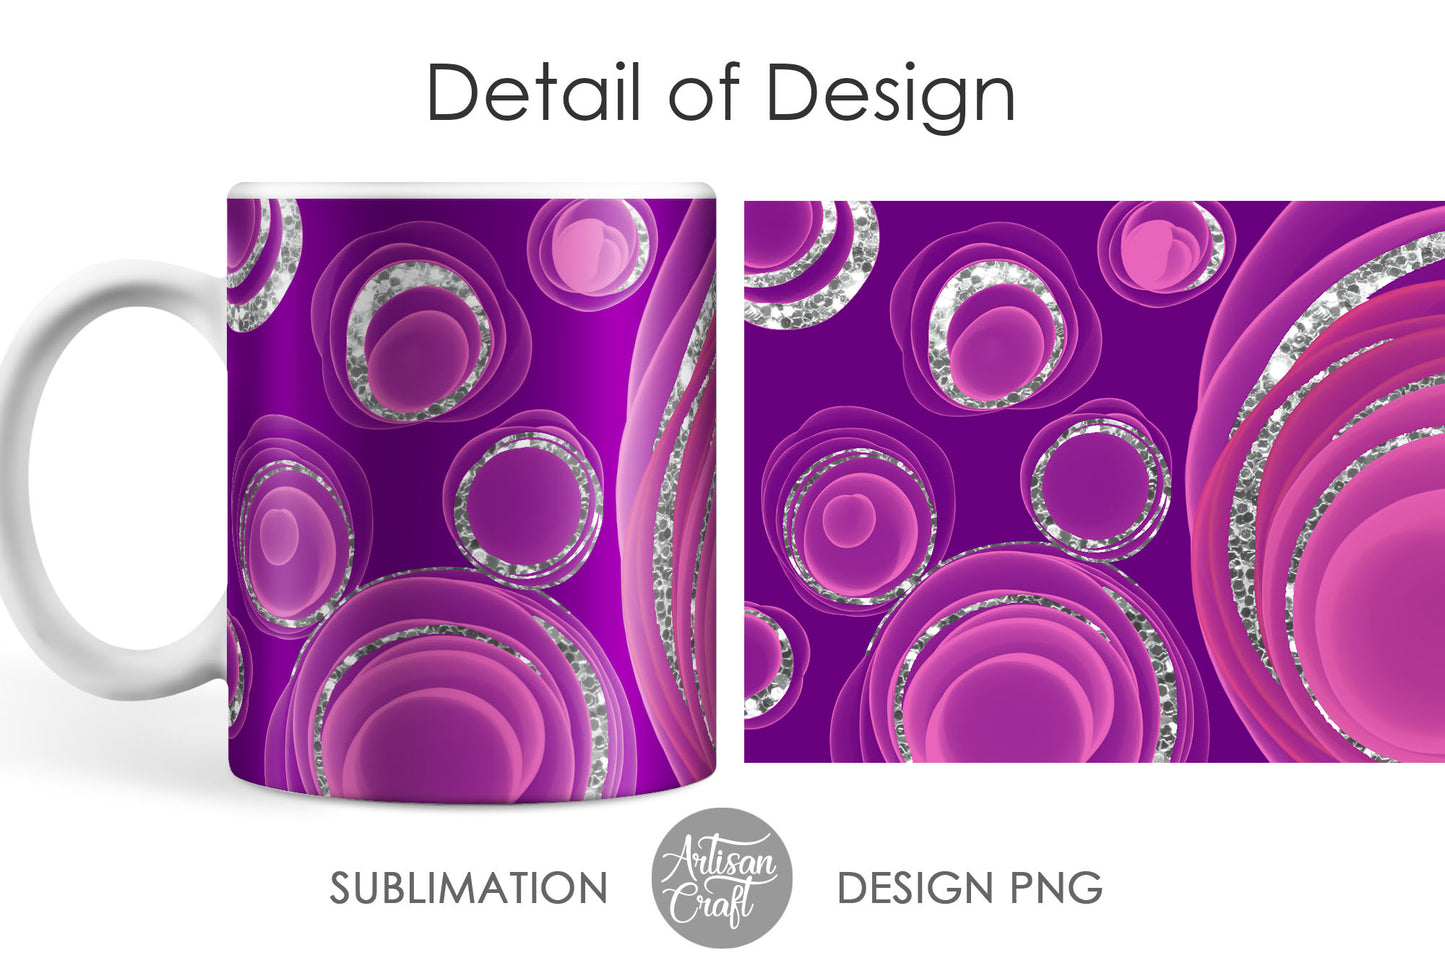 11 oz Mug sublimation PNG with alcohol ink art